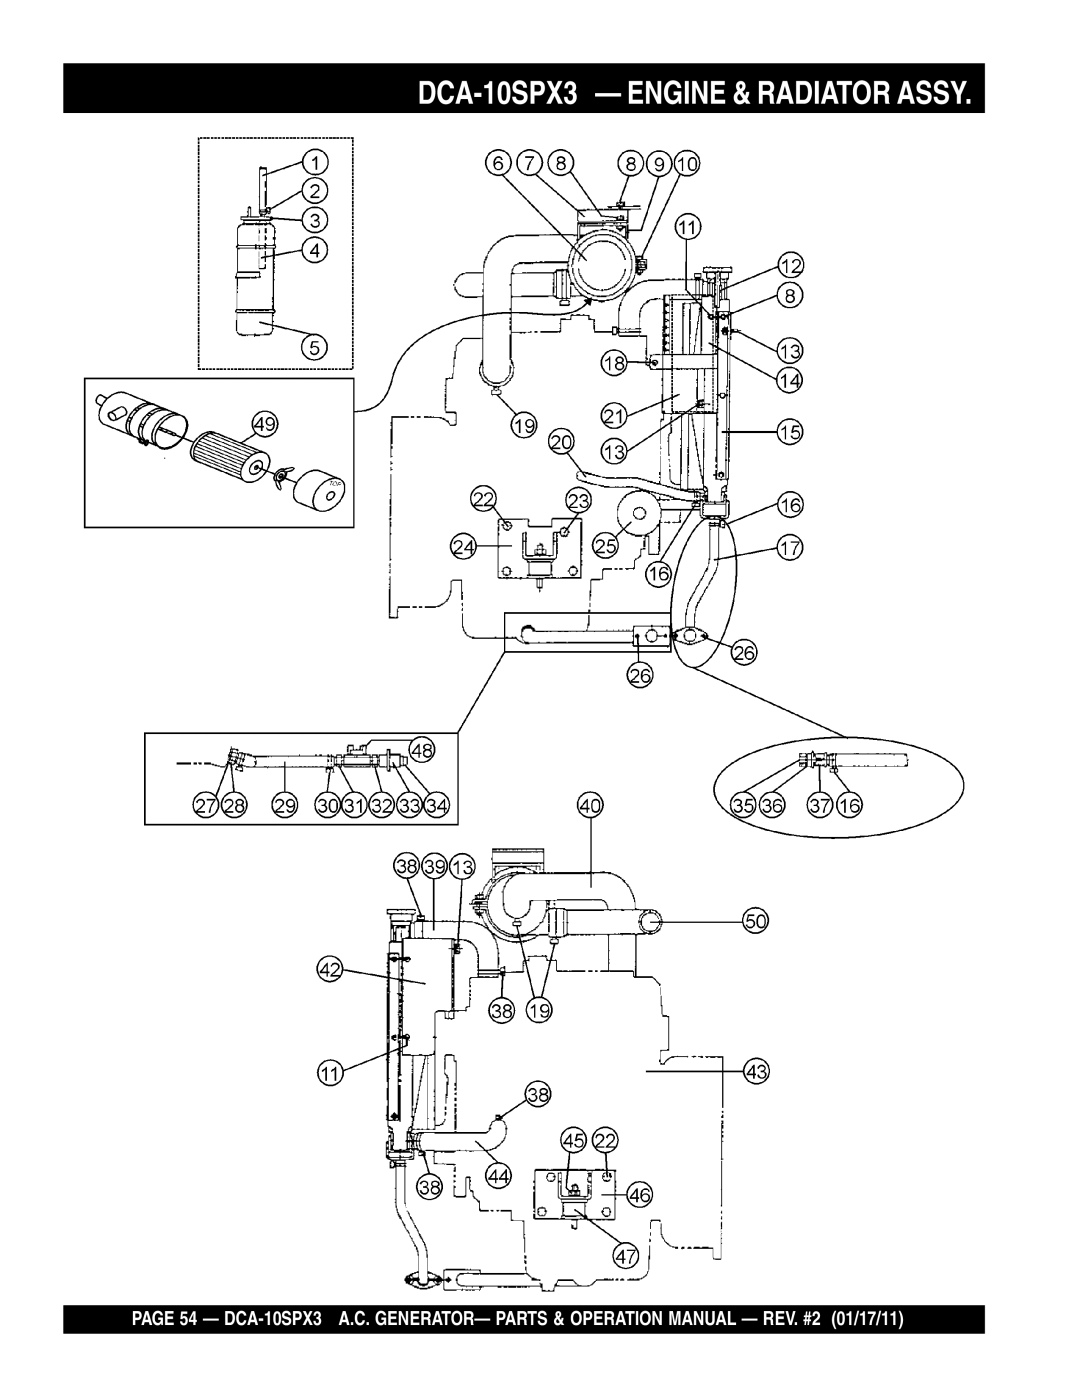 Multiquip DCA10SPX3 manual DCA-10SPX3 - ENGINE & RADIATOR ASSY 